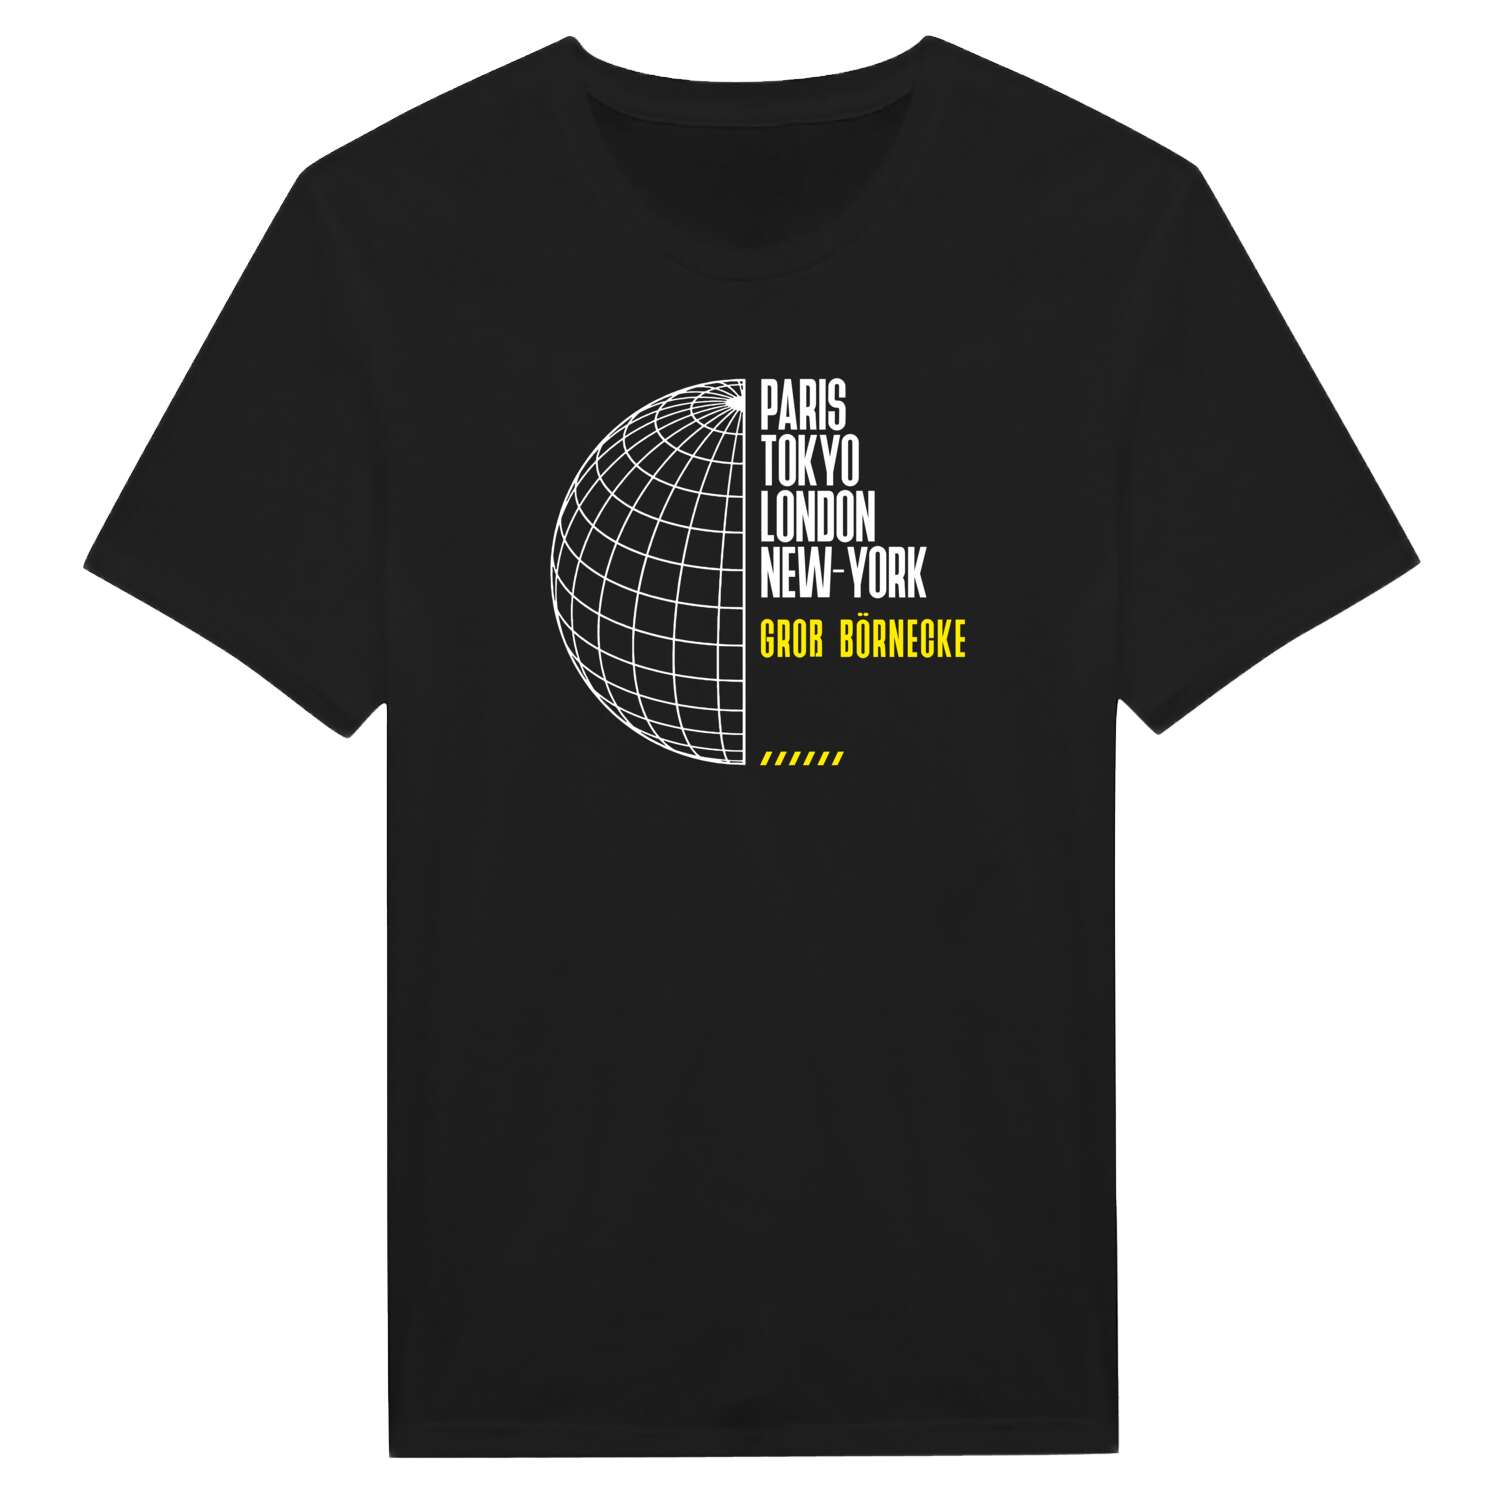 Groß Börnecke T-Shirt »Paris Tokyo London«